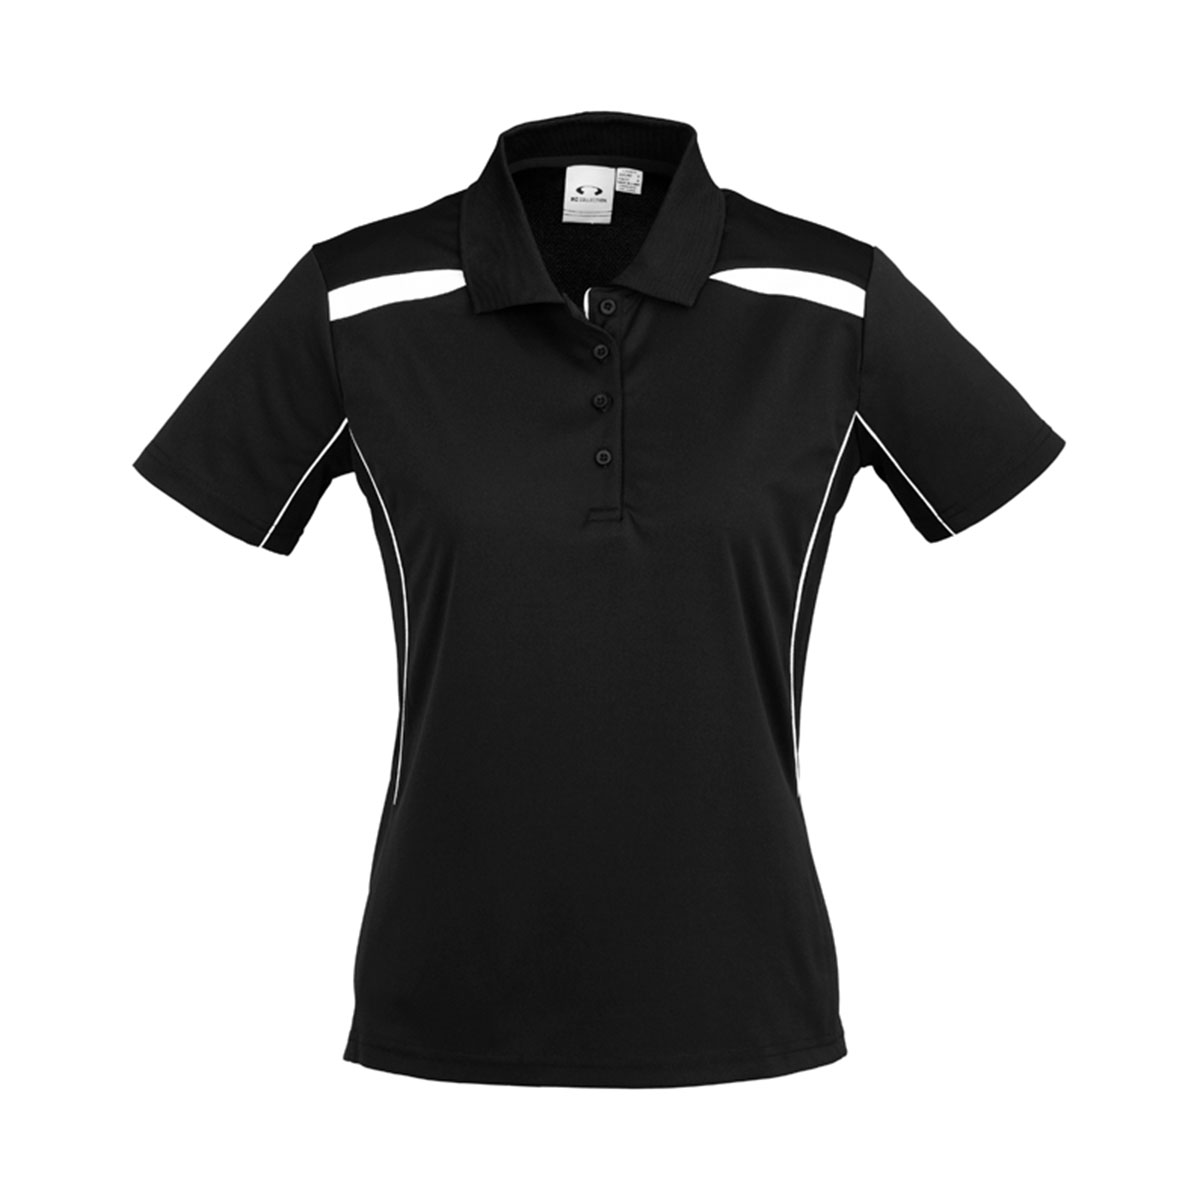 Ladies United Short Sleeve Polo-Black / White